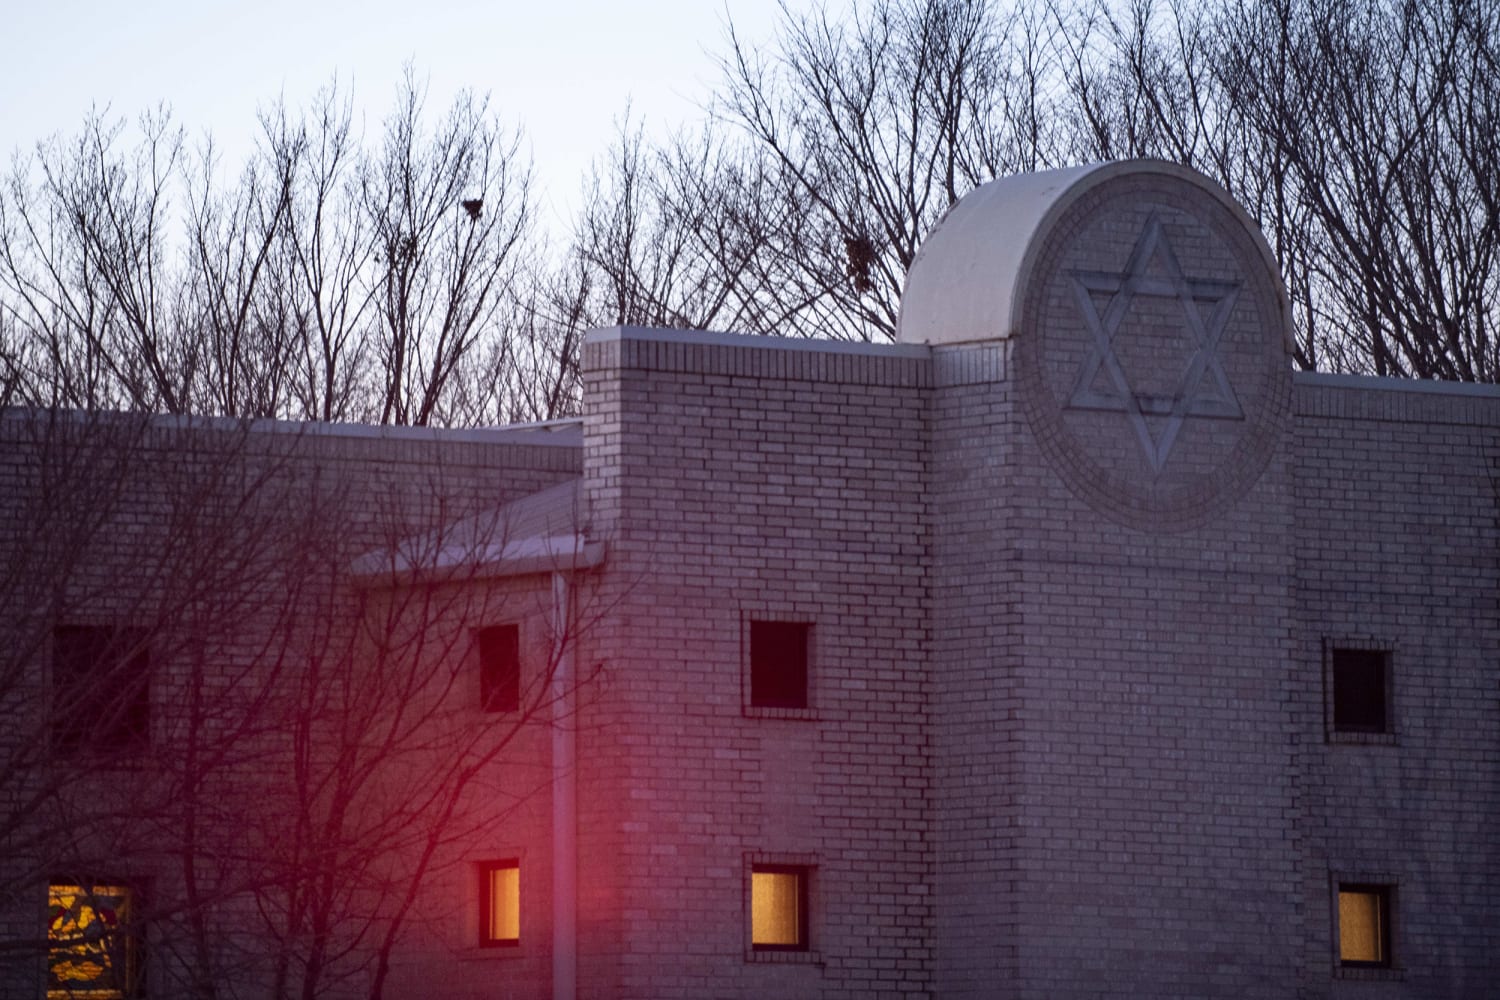 Potomac Synagogue Holds Community Vigil for Israel Thursday - Montgomery  Community Media